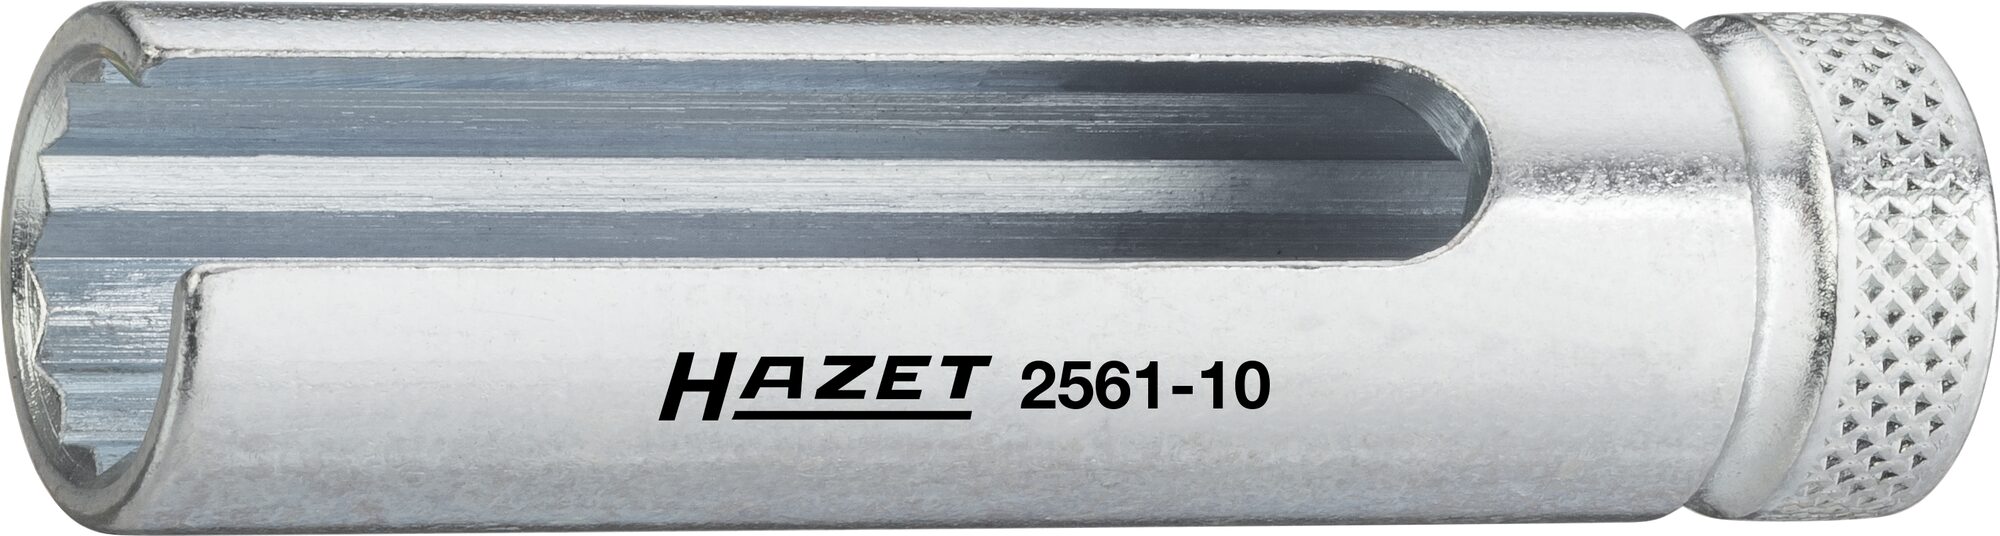 HAZET Turbolader Steckschlüsseleinsatz · Doppelsechskant 2561-10 · Vierkant hohl 6,3 mm (1/4 Zoll) · Außen Doppel-Sechskant Profil · 10 mm